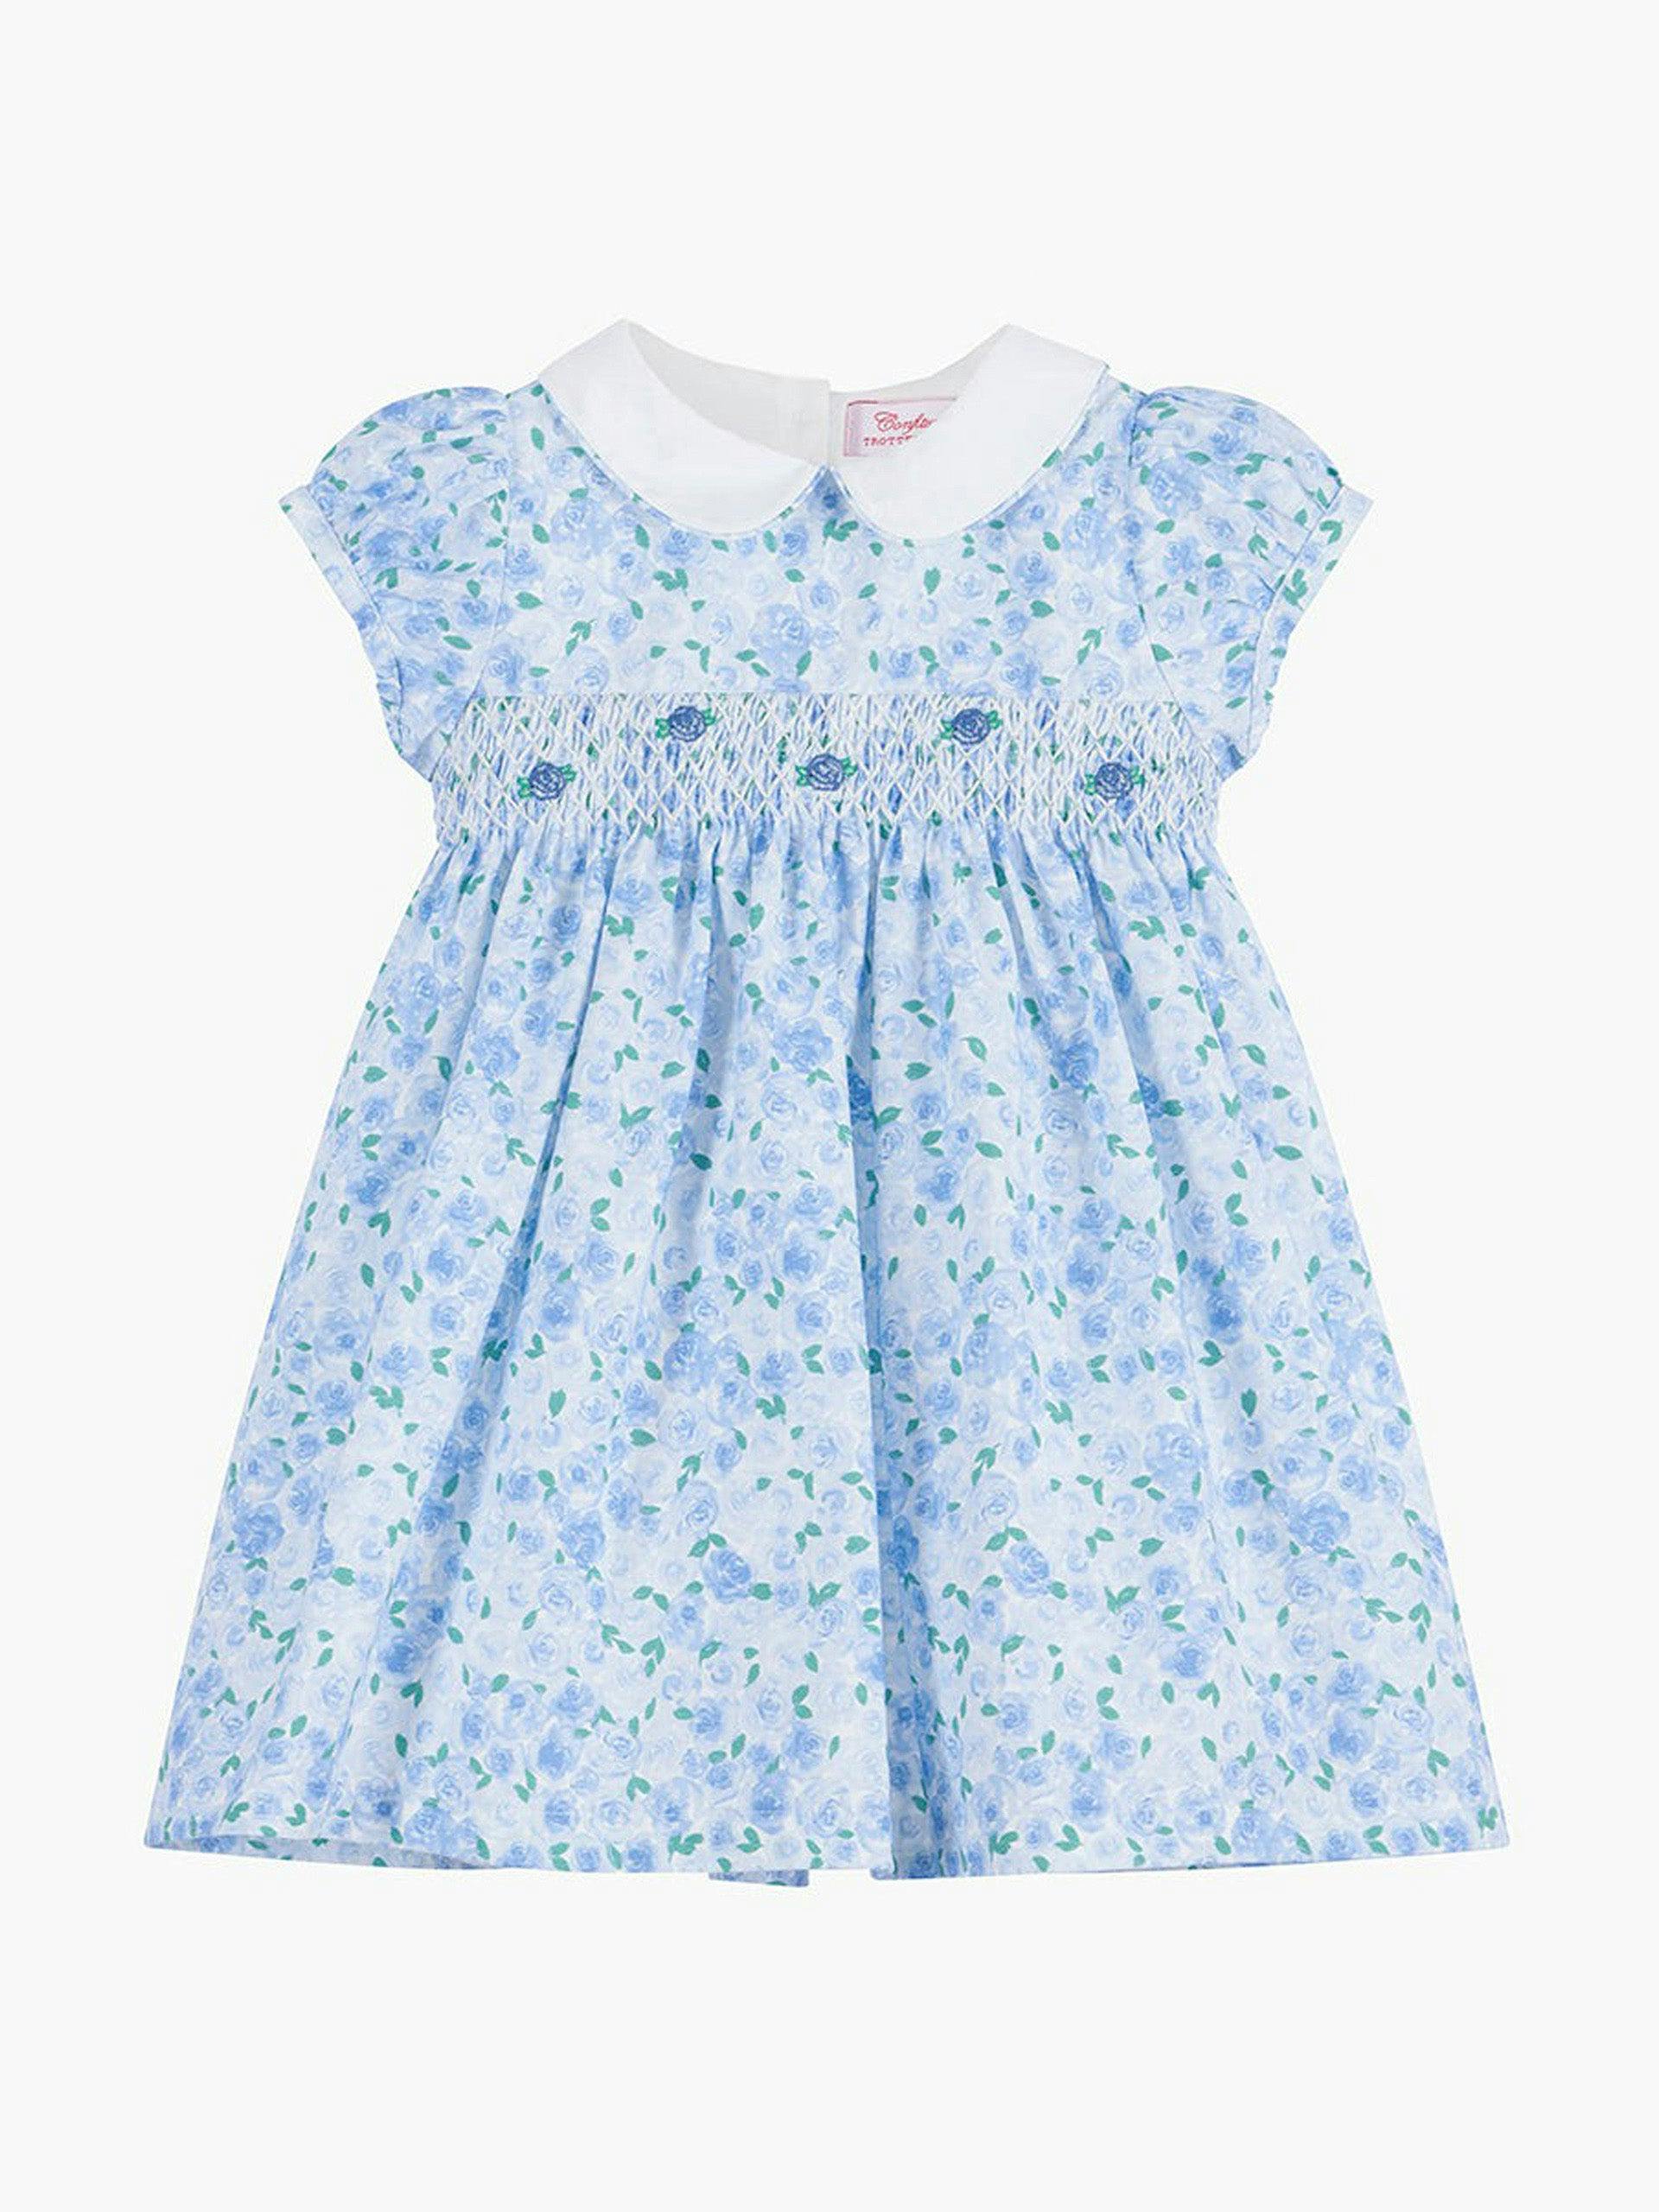 Little girls Rosie smocked dress in pale blue rose